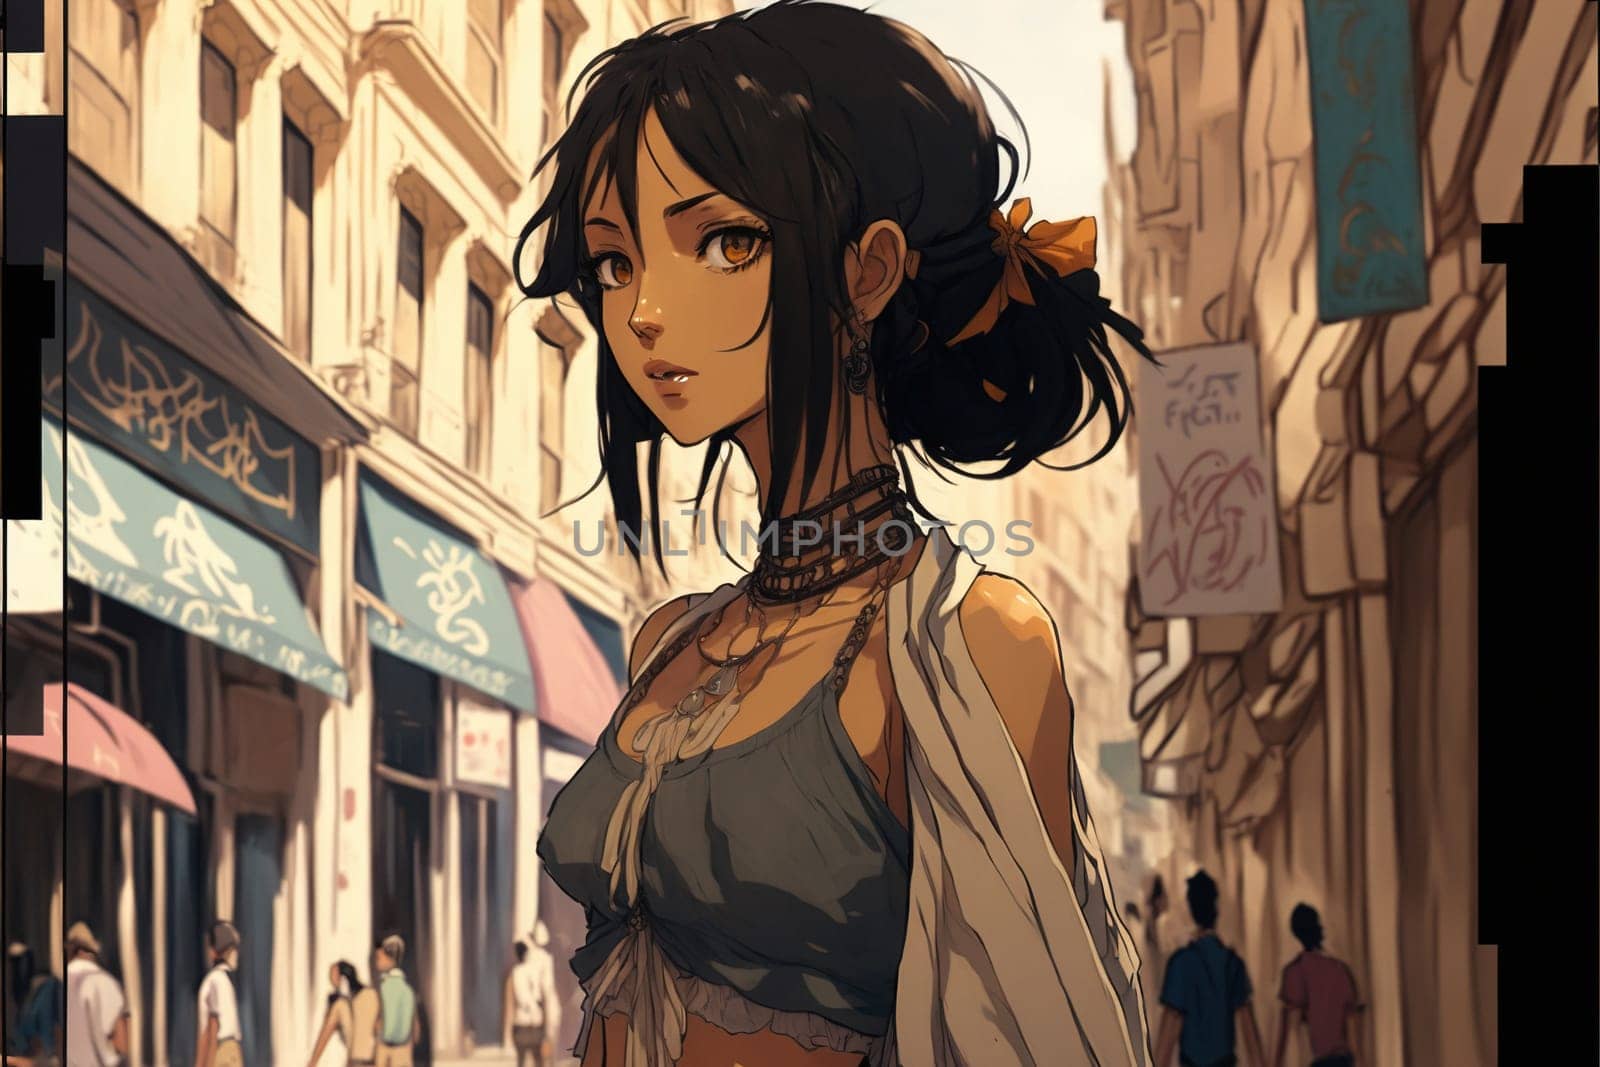 Stunning Indian-inspired Anime Girl with Sleek Black Hair Walking Gracefully on Urban Streets illustration